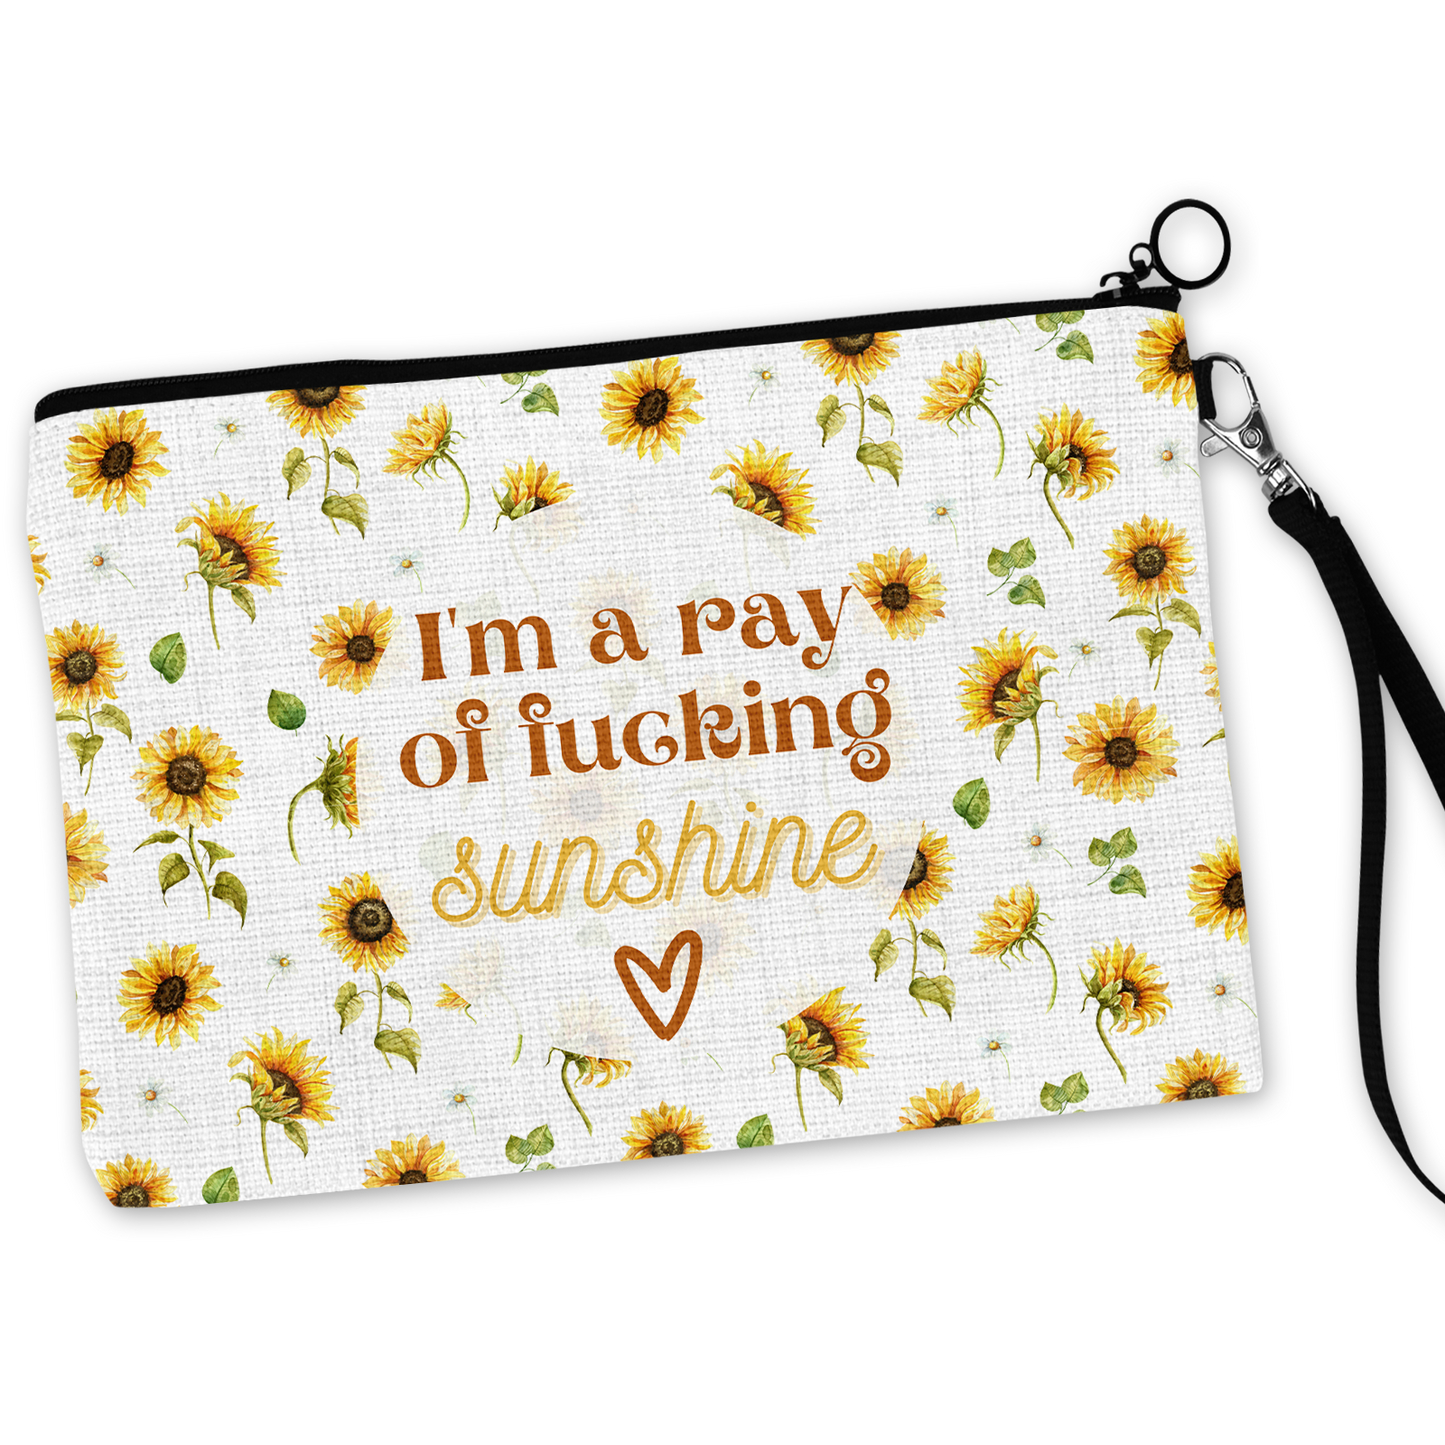 Ray Of Fucking Sunshine Cosmetic Bag